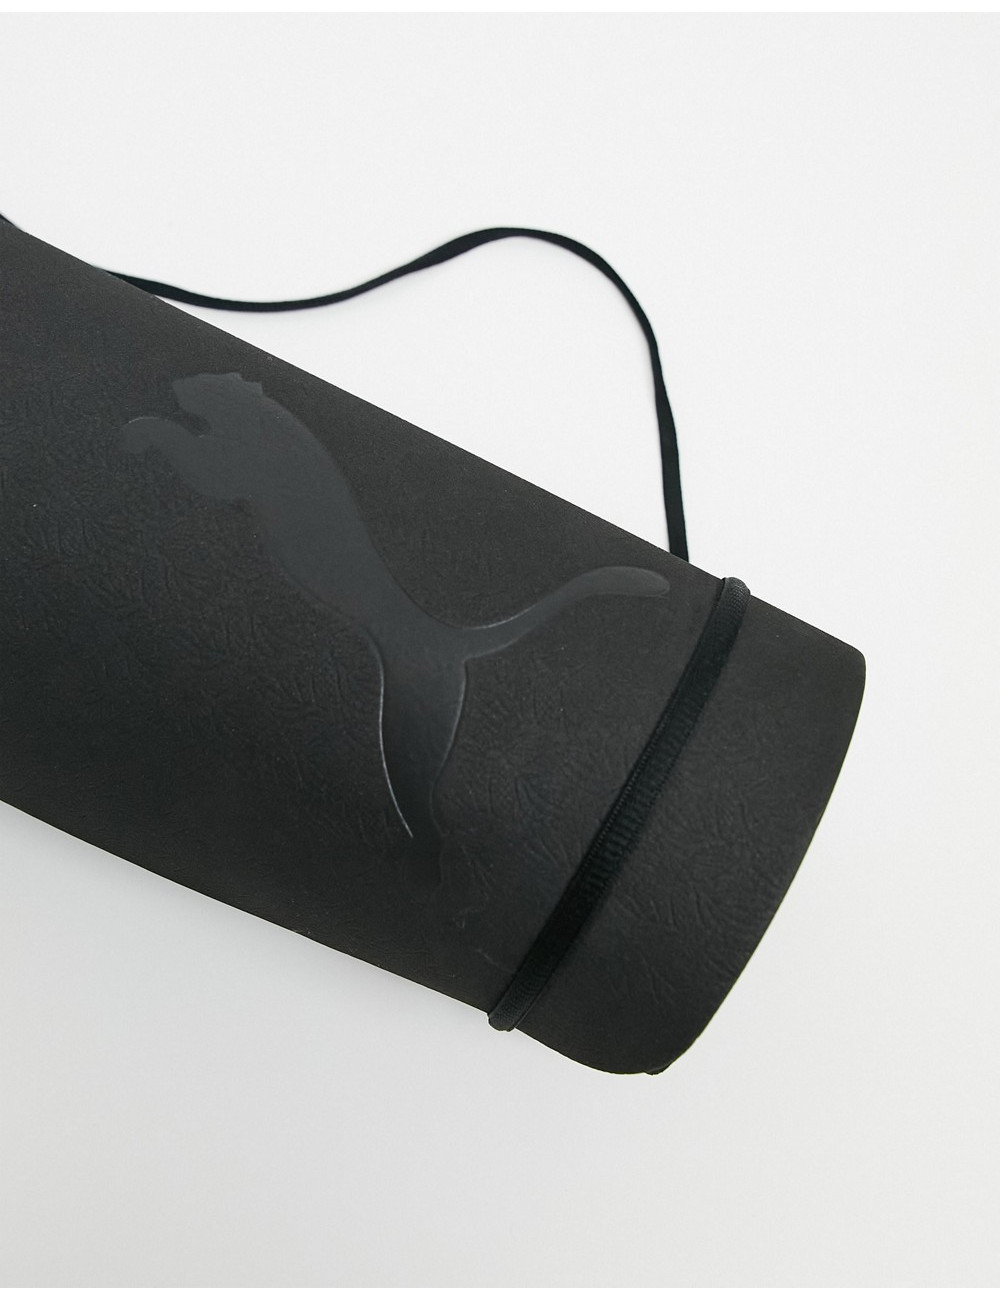 Puma Studio Yoga mat in black